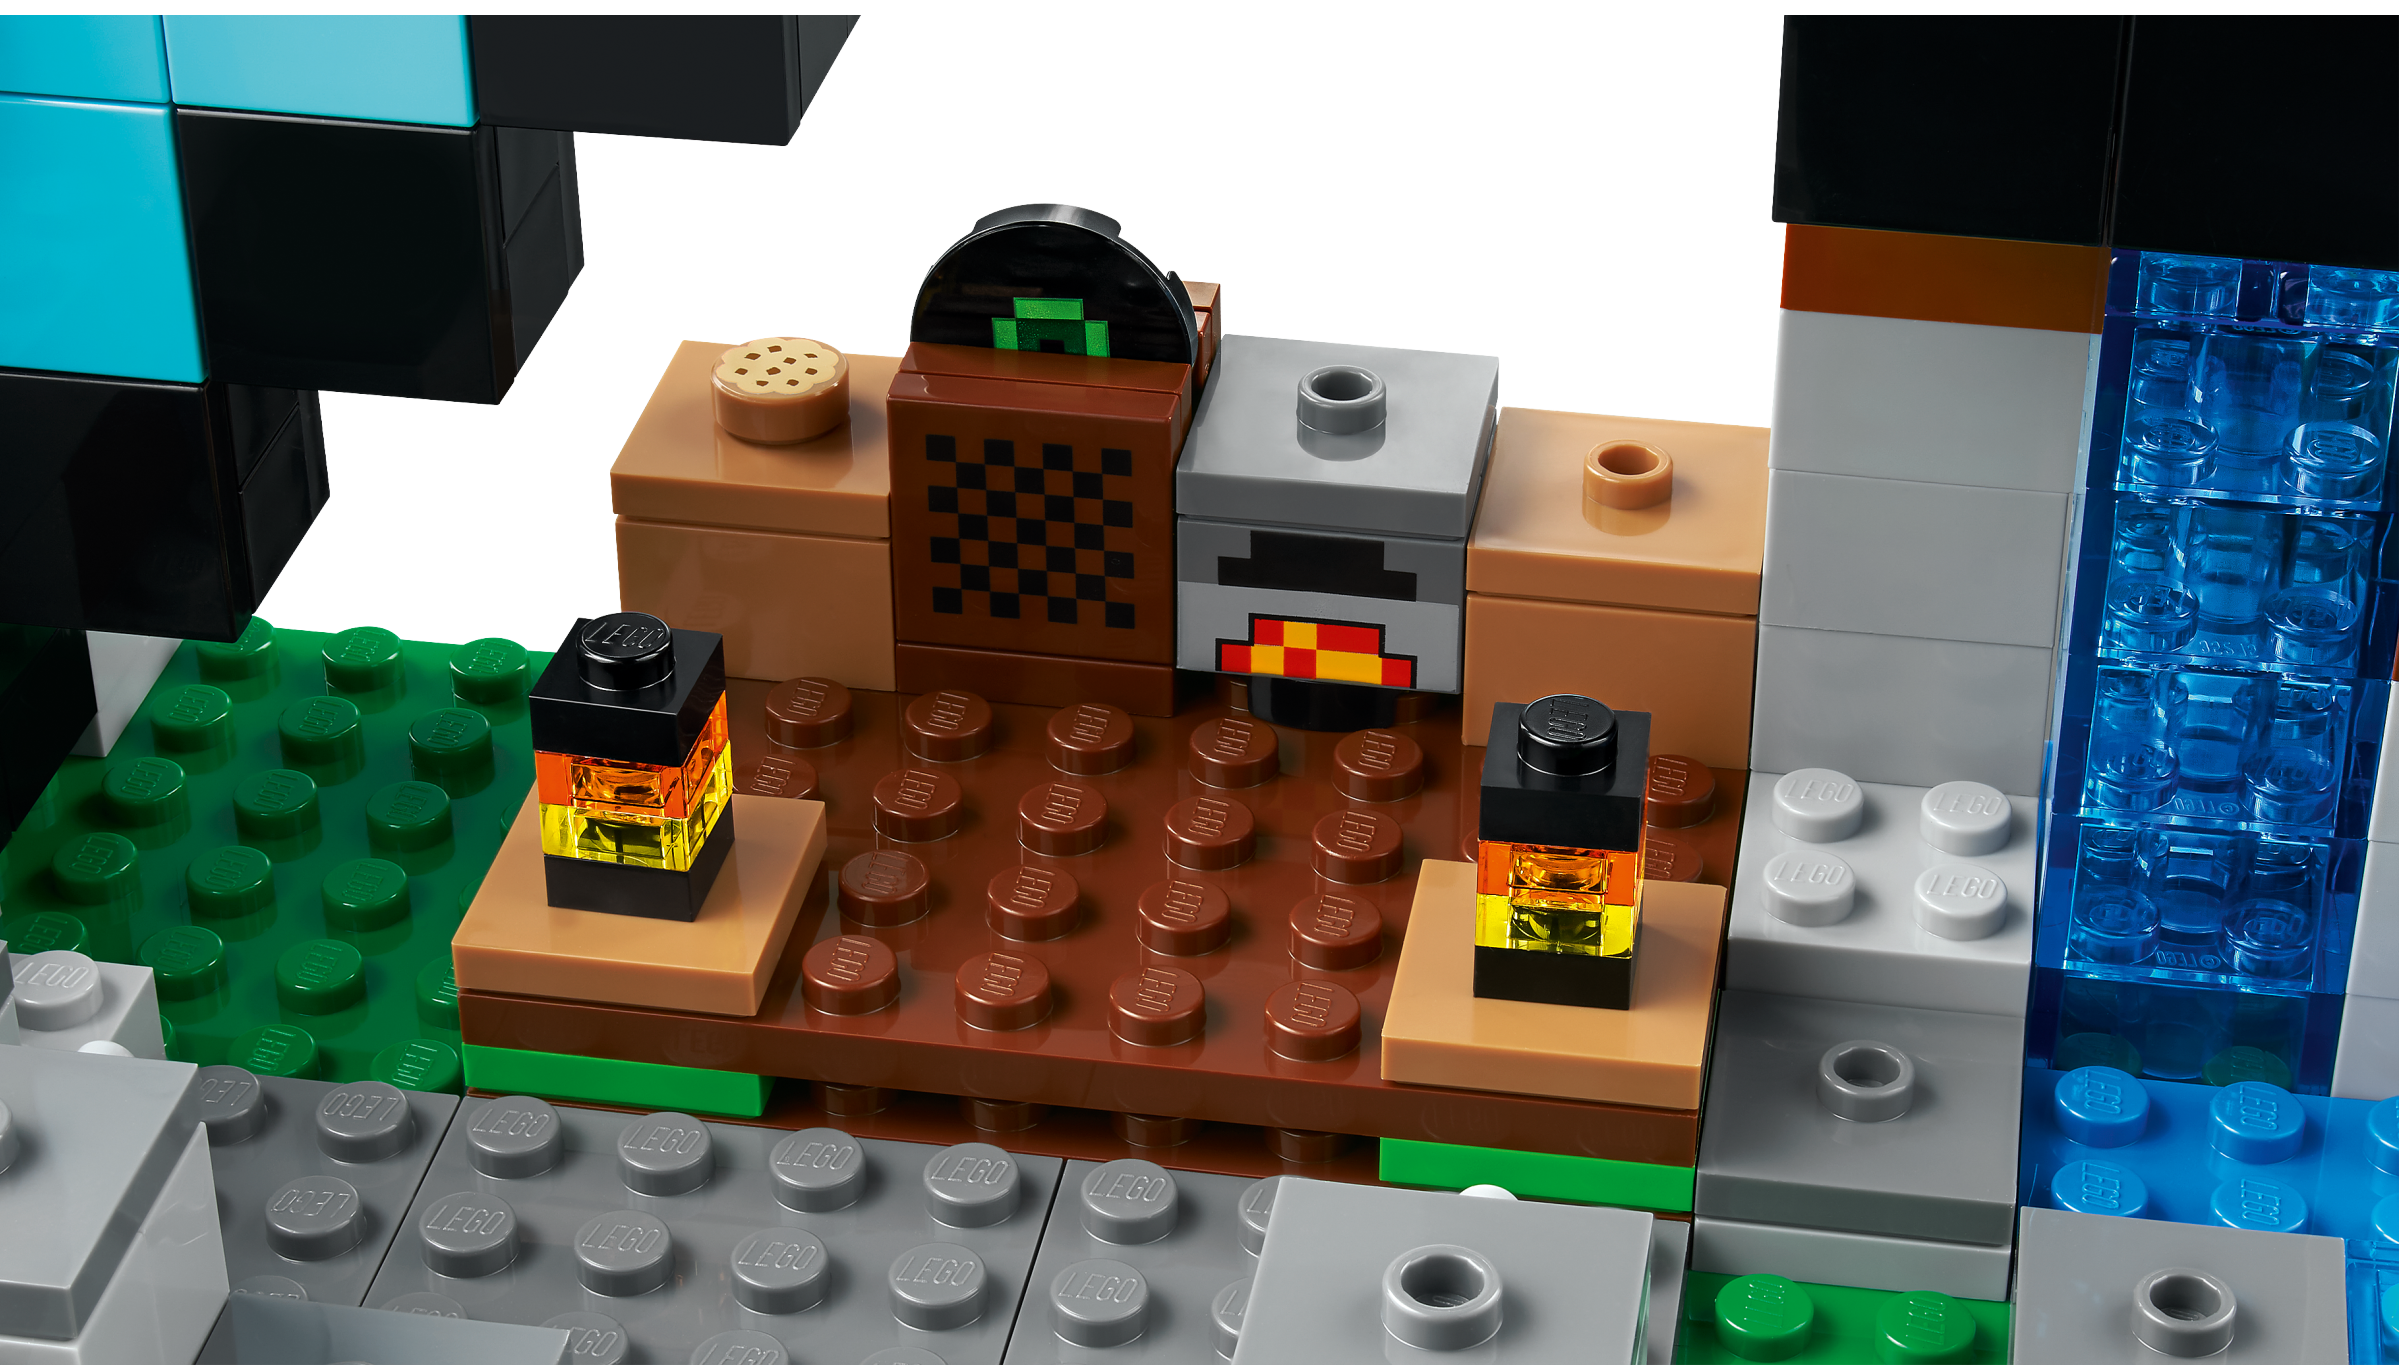 LEGO Minecraft The Sword Outpost • Set 21244 • SetDB